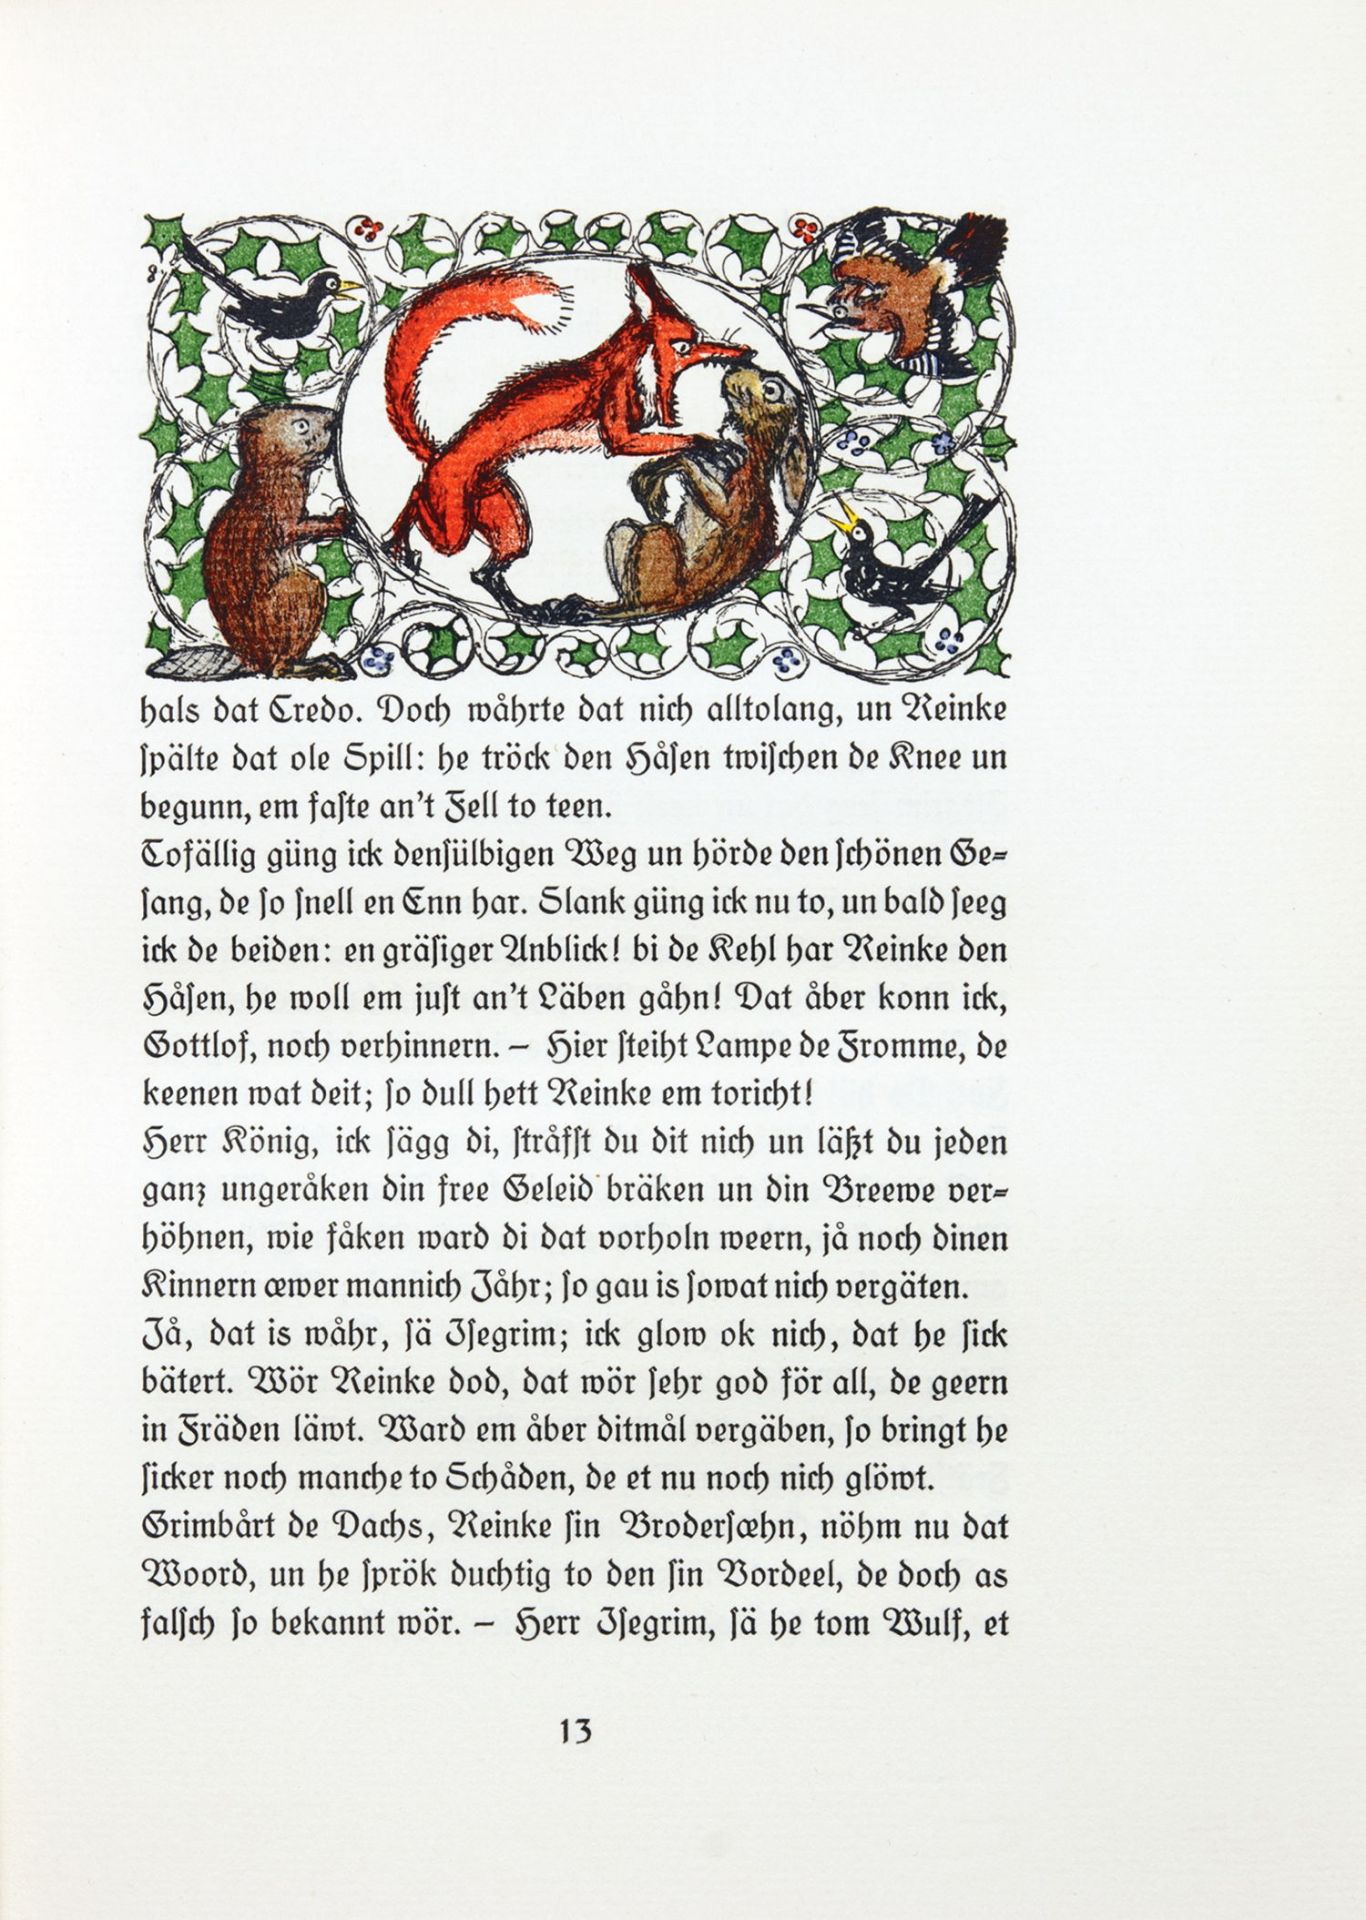 Ernst Ludwig-Presse - Christian Kleukens. Reinke Voß - Image 3 of 4